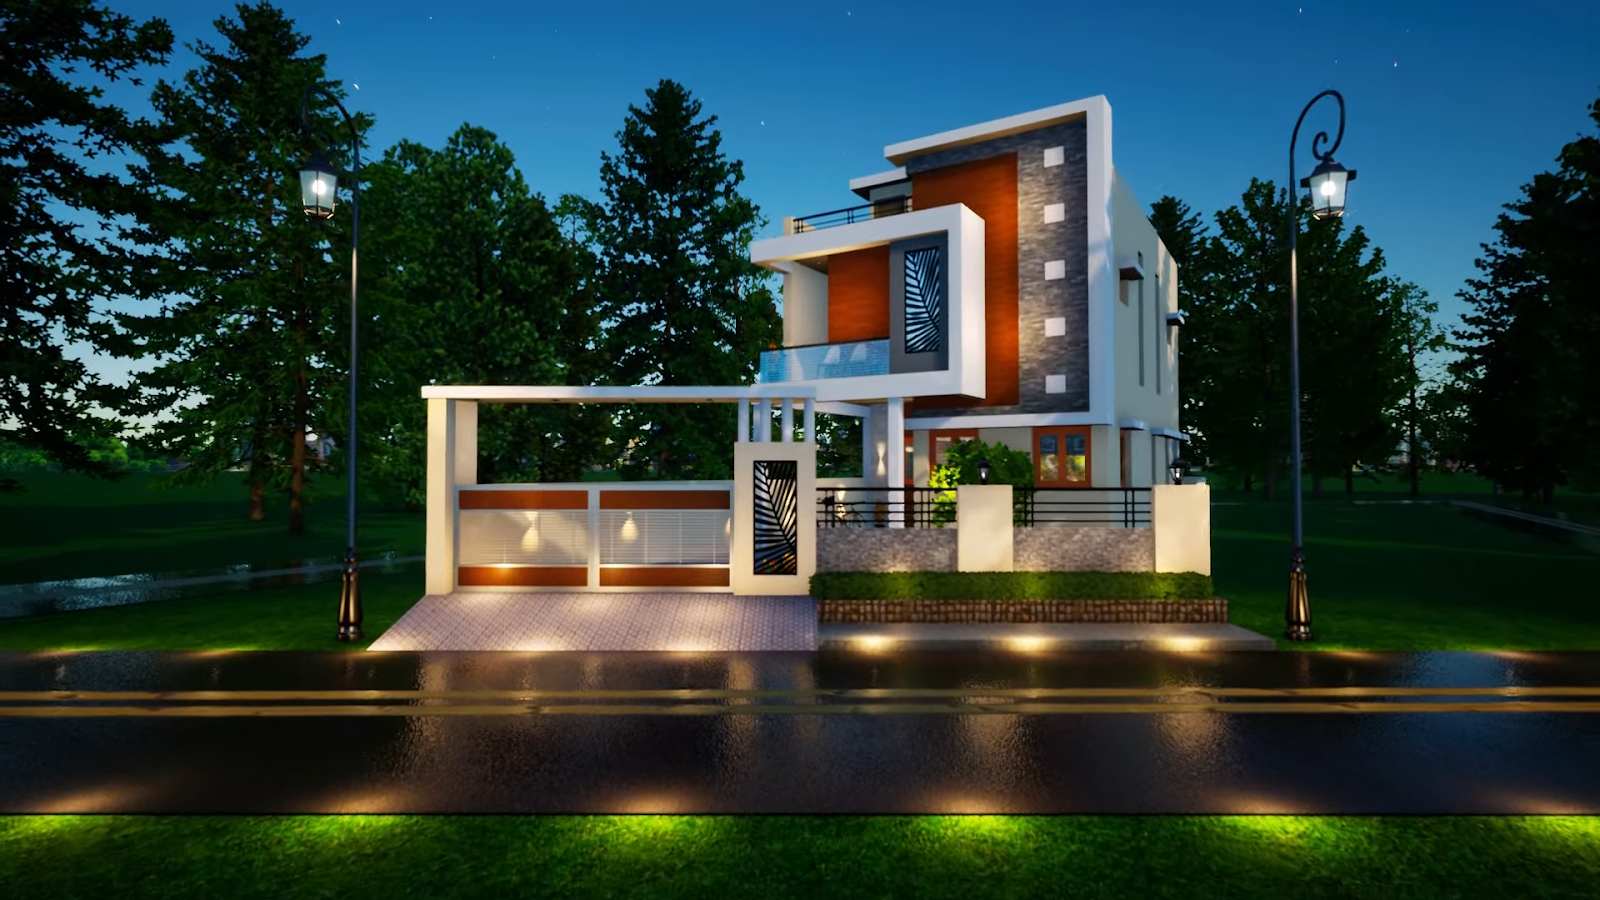 Perfect duplex house design with a garden in Bangladesh.